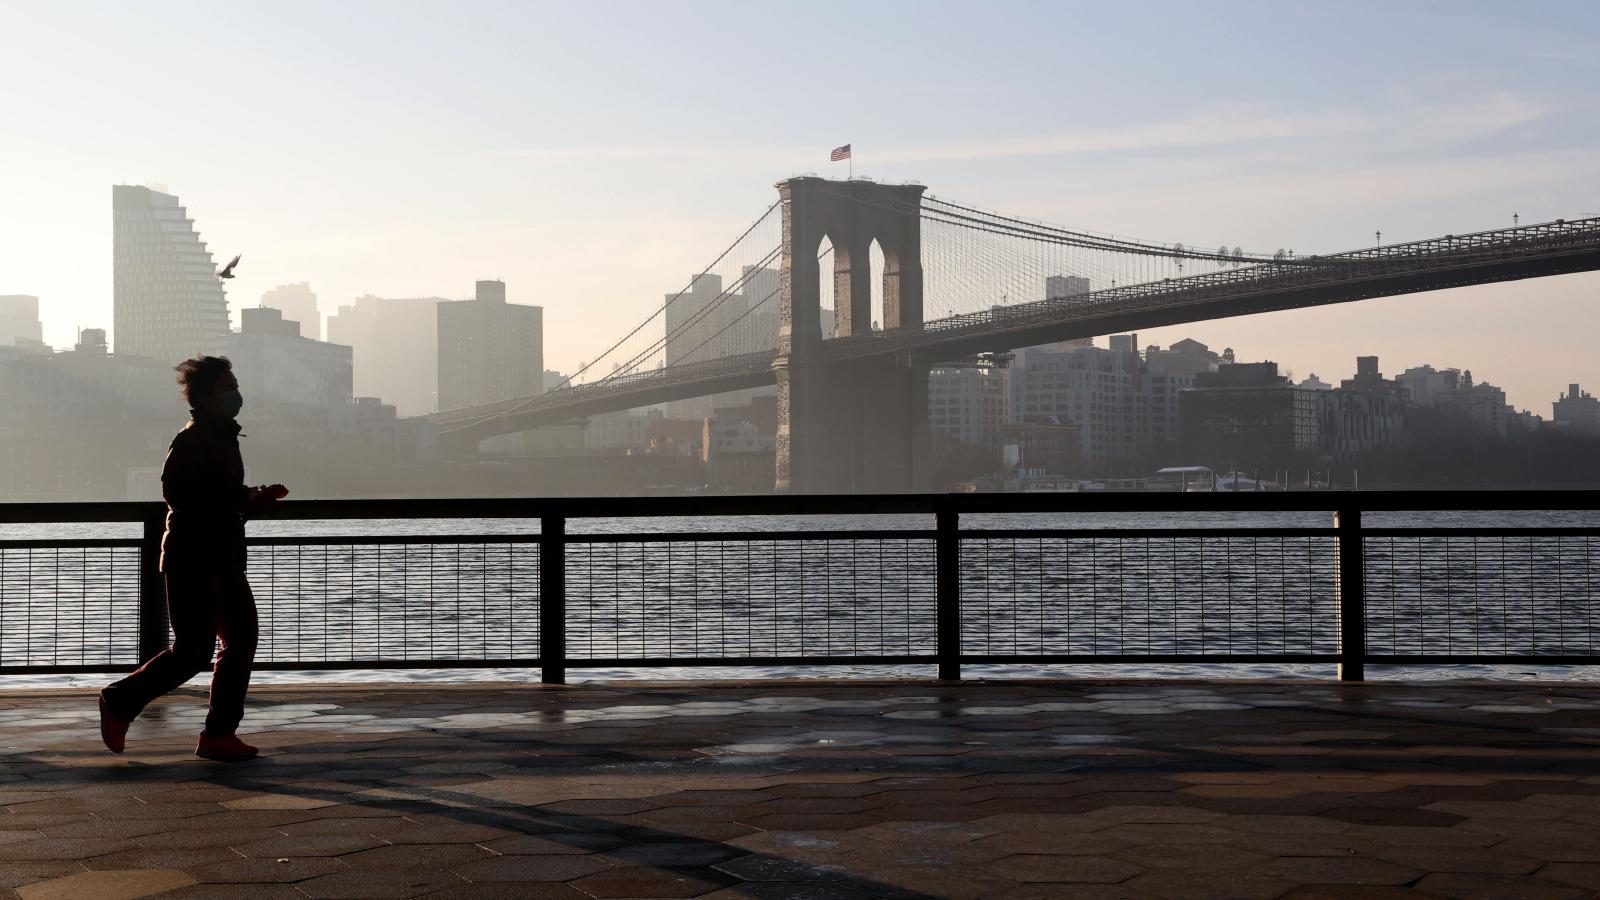 Manhattan Bridge, Brooklyn Bridge | Buy this image